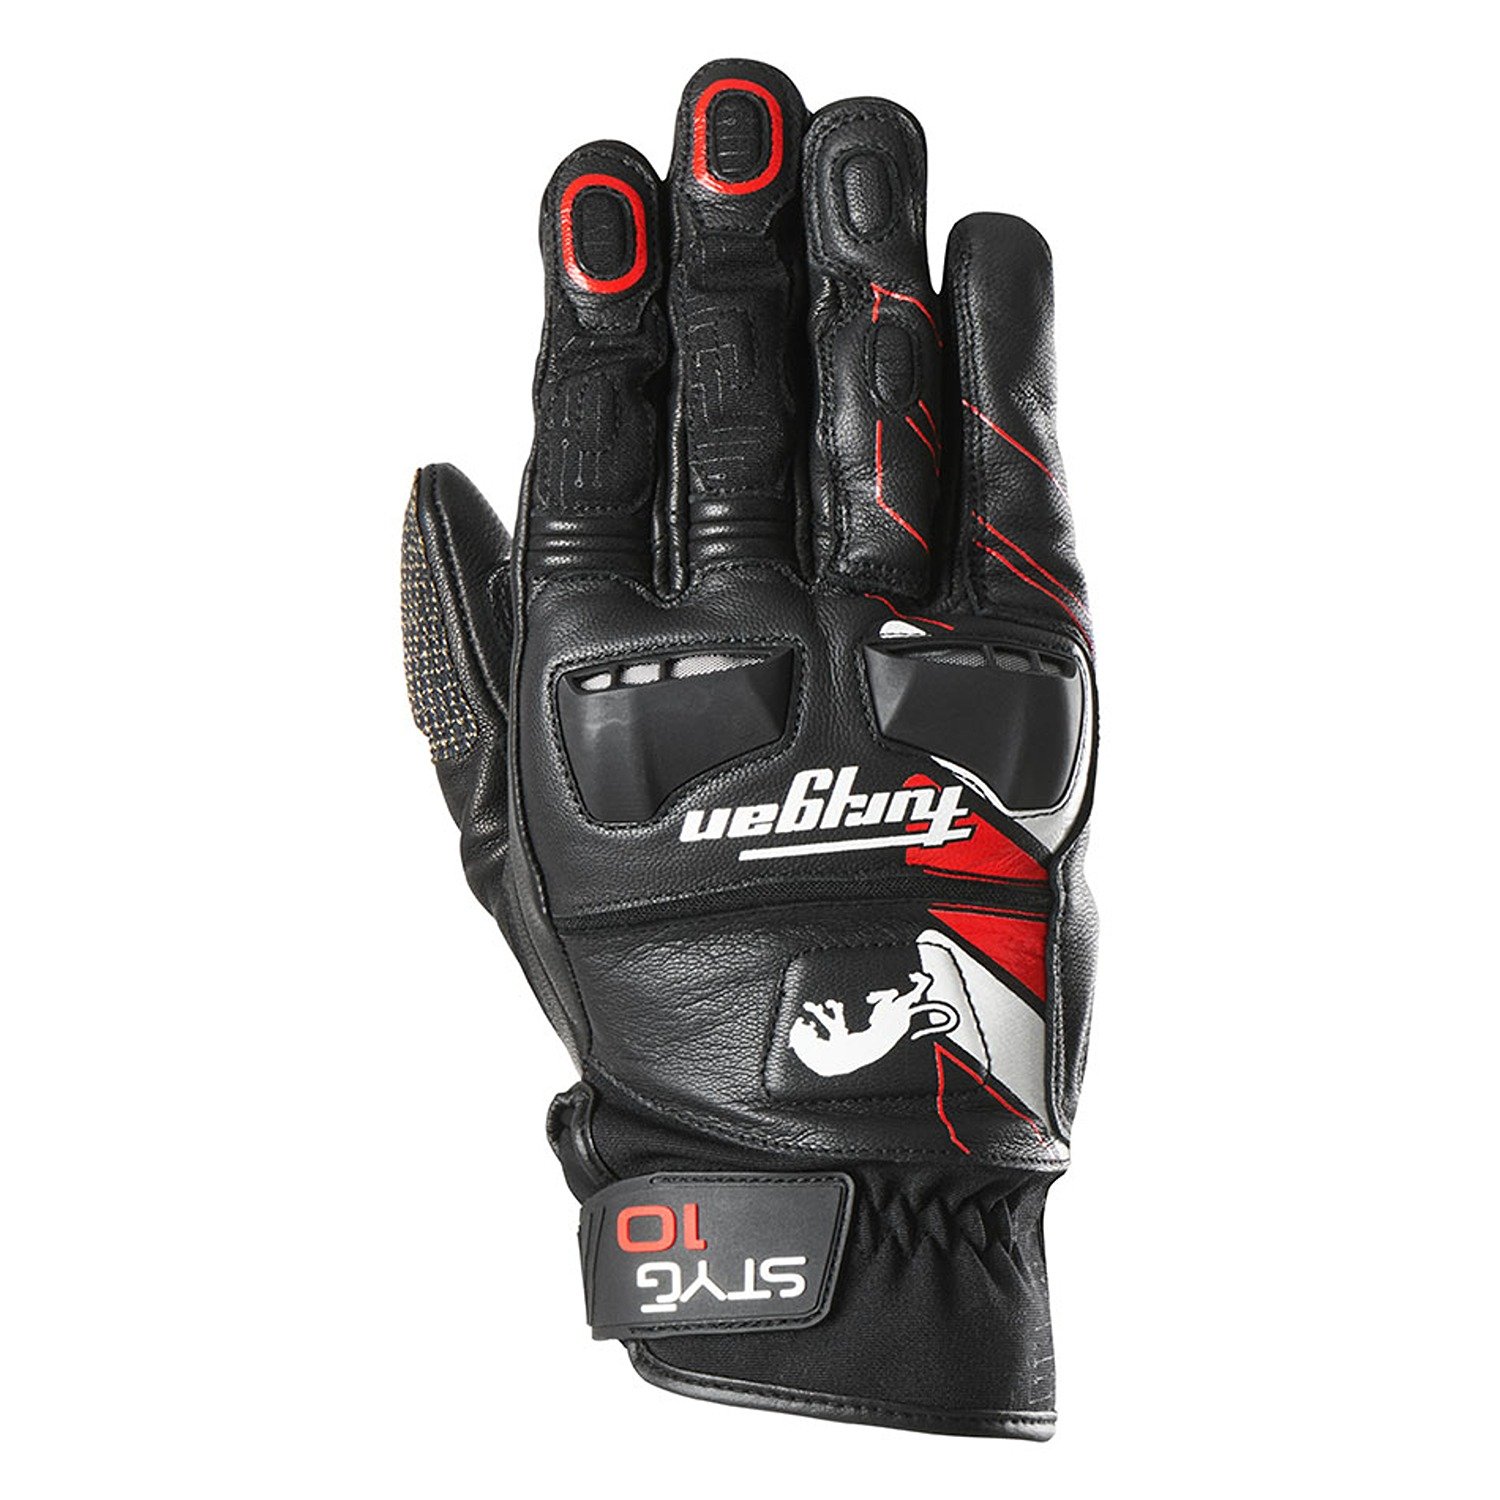 Image of Furygan Styg10 Gloves Black White Red Size L EN